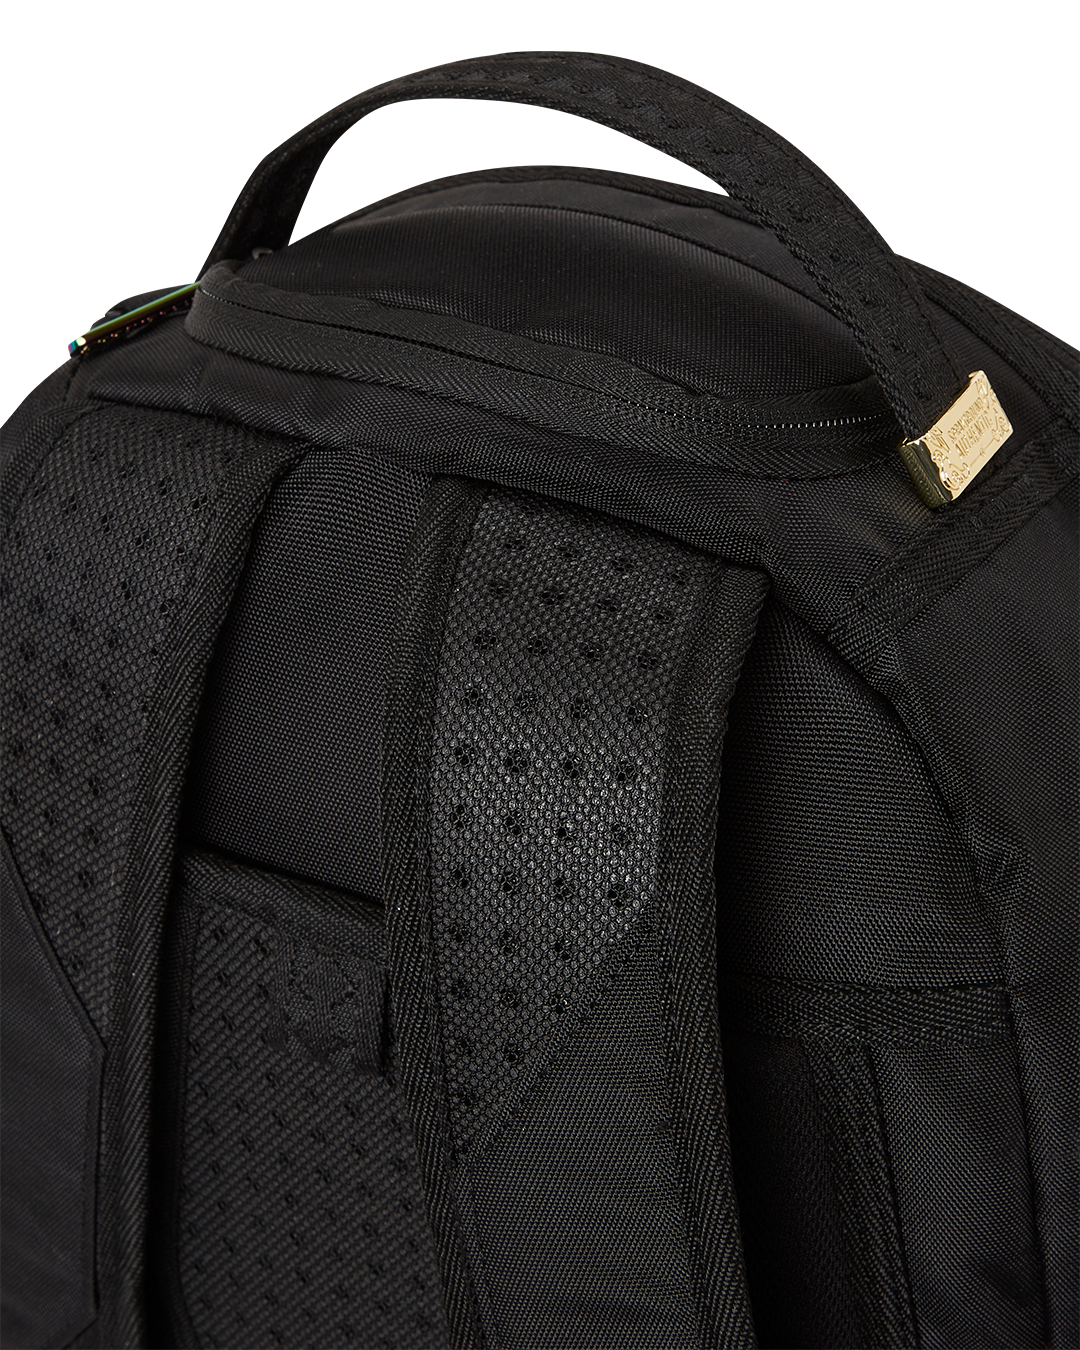 Backpacks  Backpacks, Shark backpack, Best laptop backpack